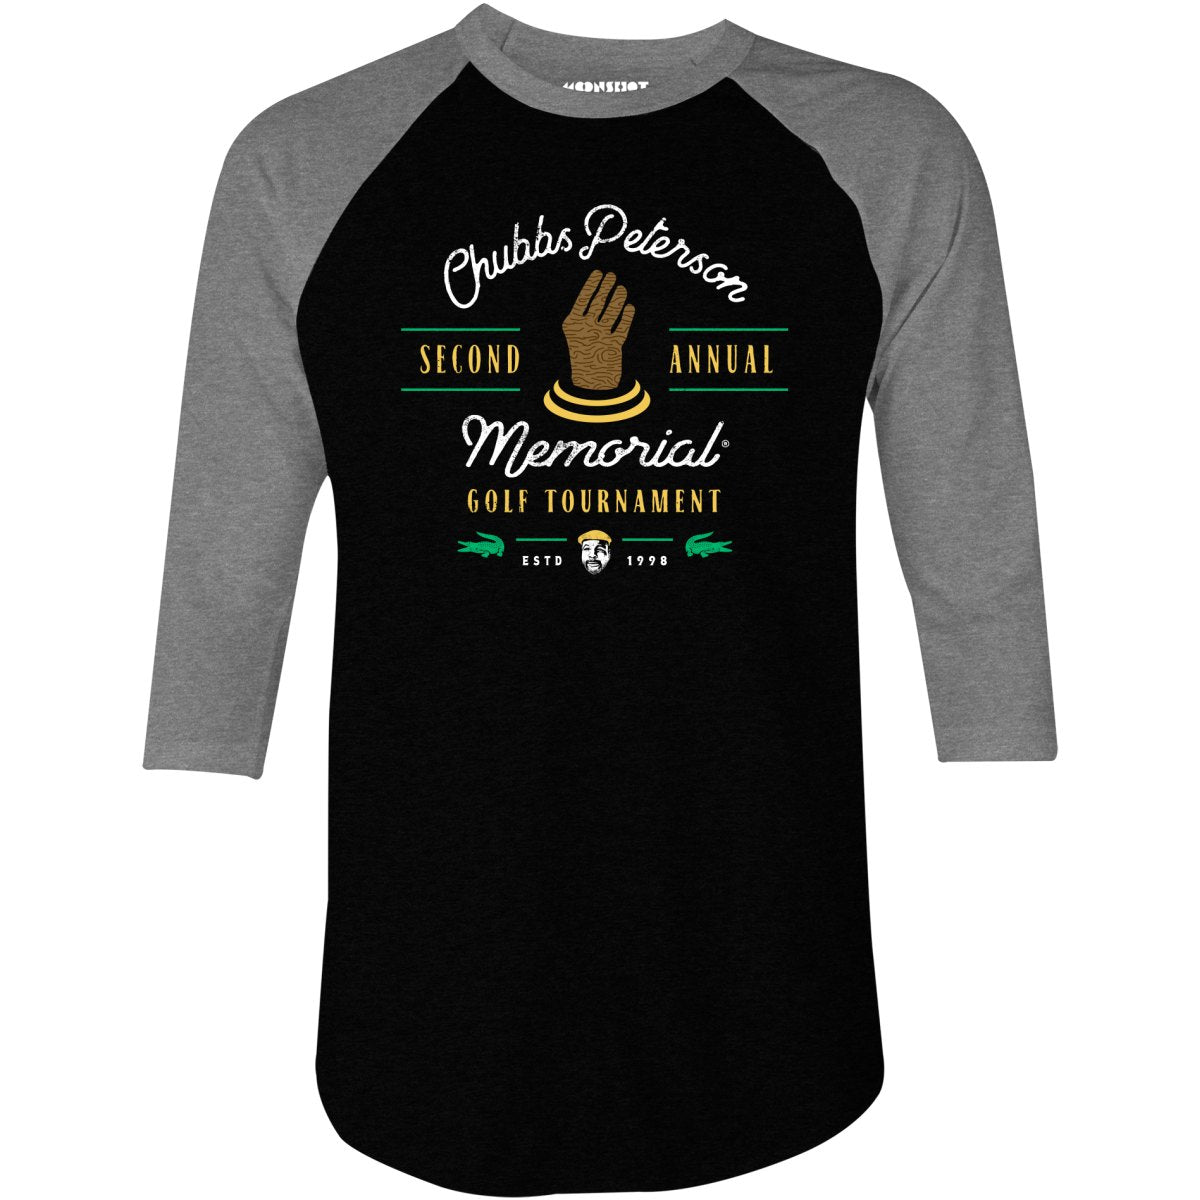 Chubbs Peterson Memorial Golf Tournament - 3/4 Sleeve Raglan T-Shirt